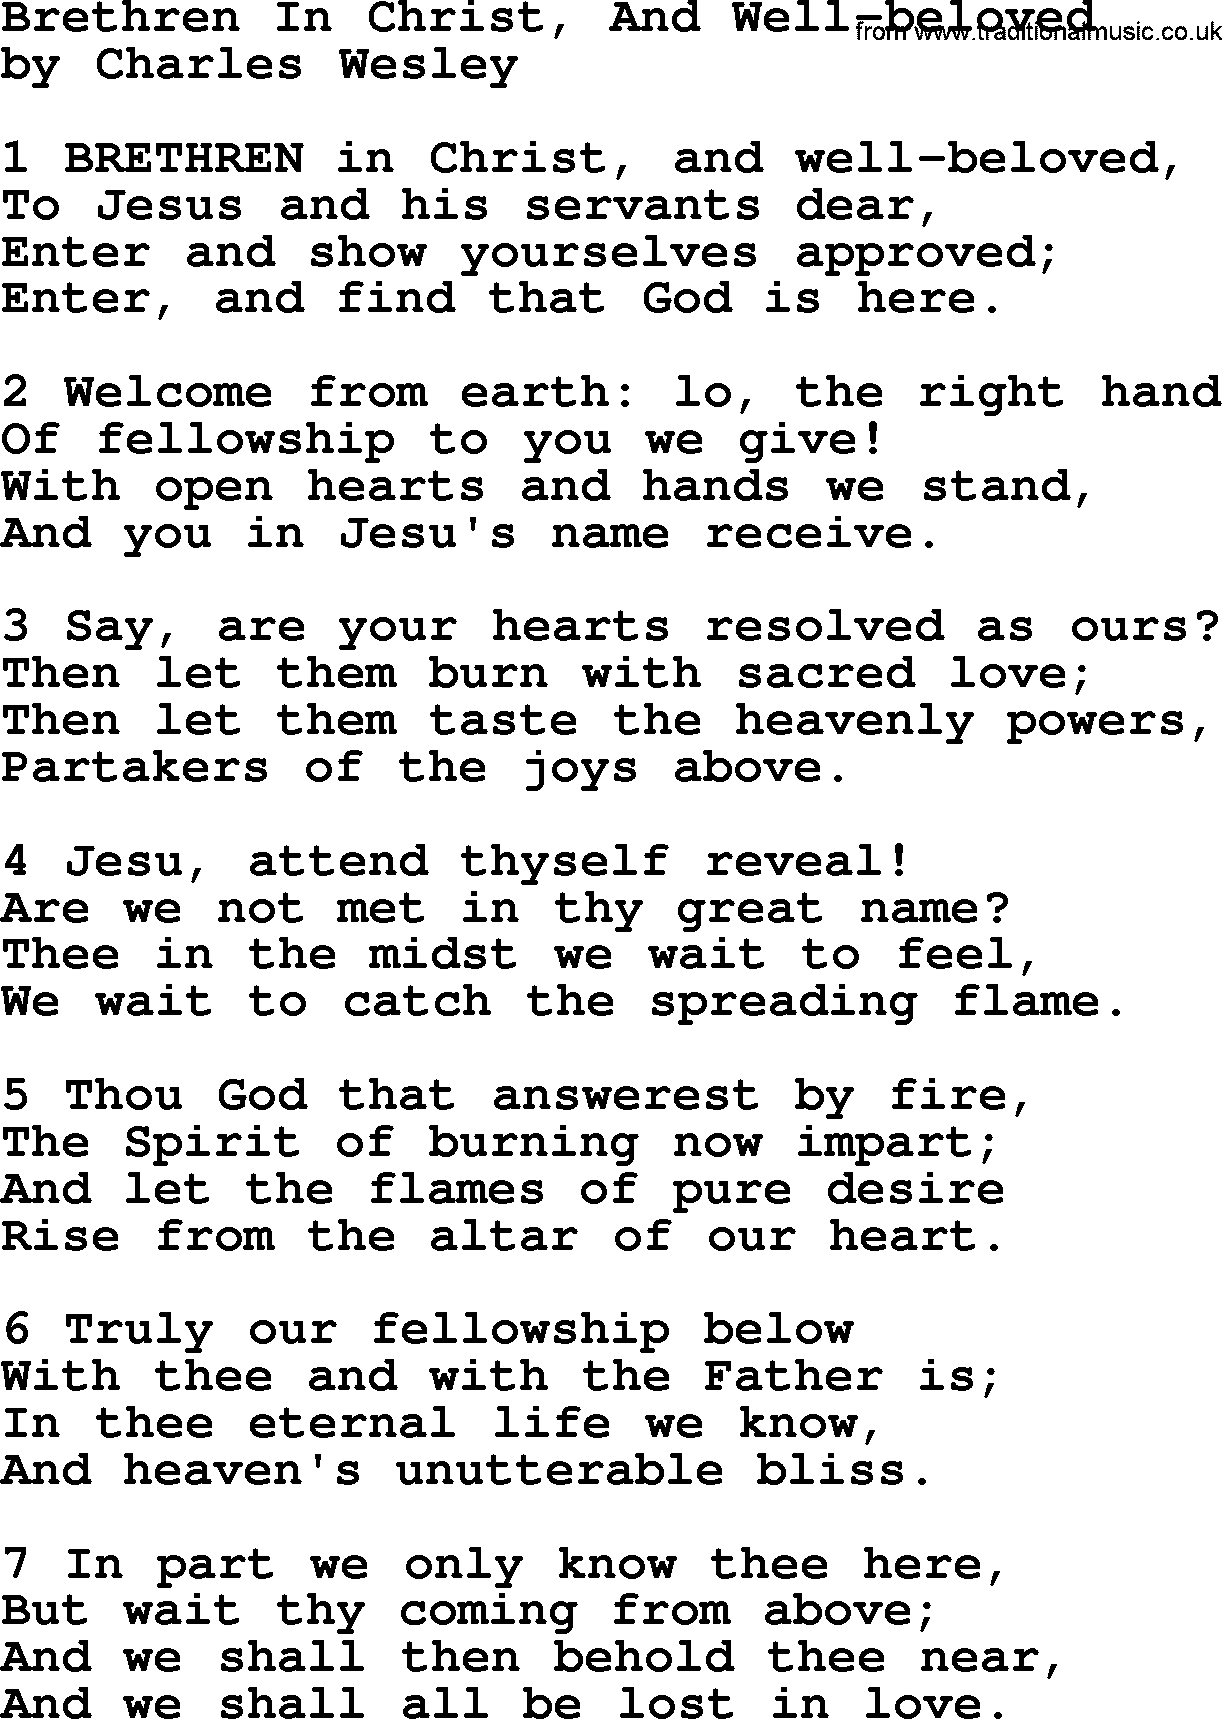 Charles Wesley hymn: Brethren In Christ, And Well-beloved, lyrics